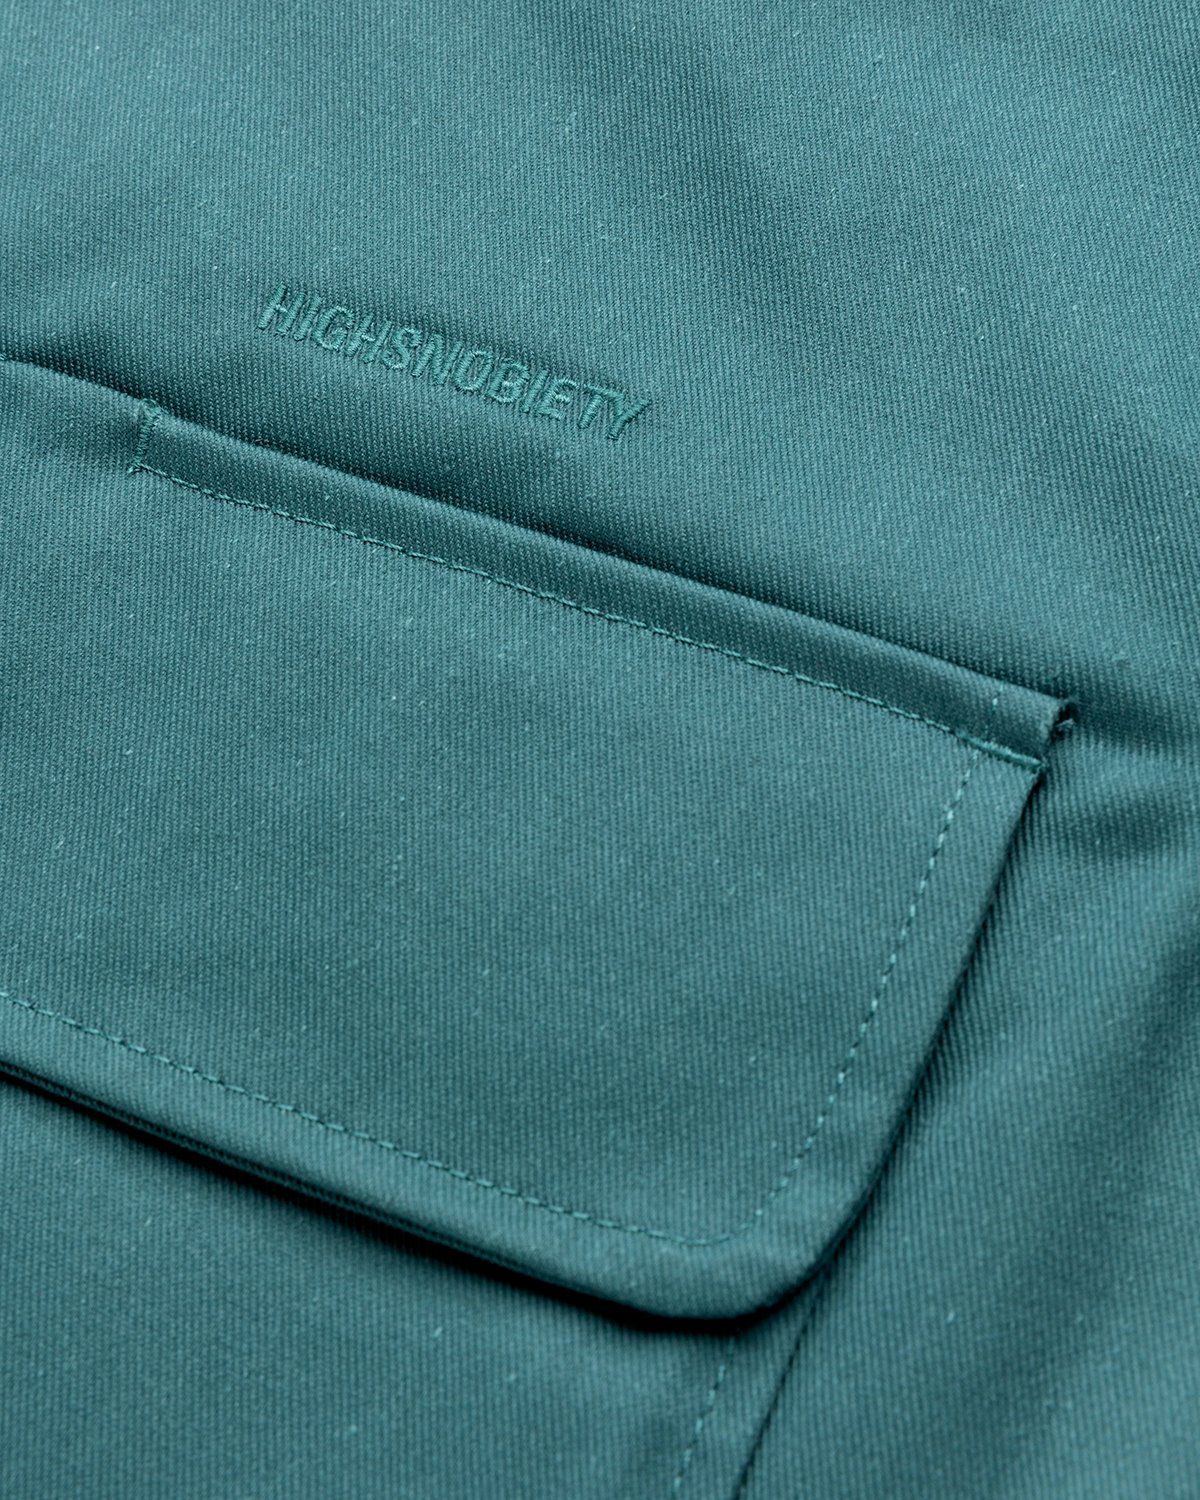 Highsnobiety x Dickies – Service Shirt Lincoln Green - Longsleeve Shirts - Green - Image 4